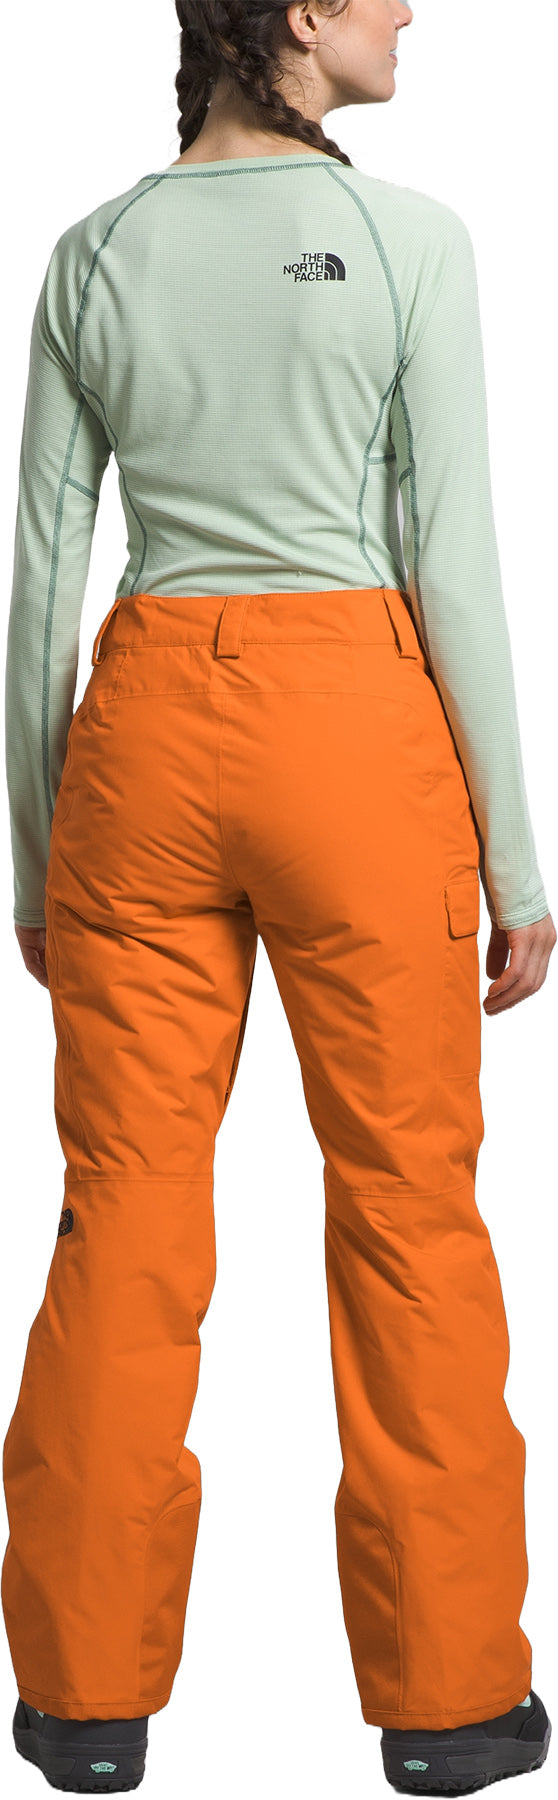 The North Face Zumu Pants Women's Grey Athletic Casual Sportswear